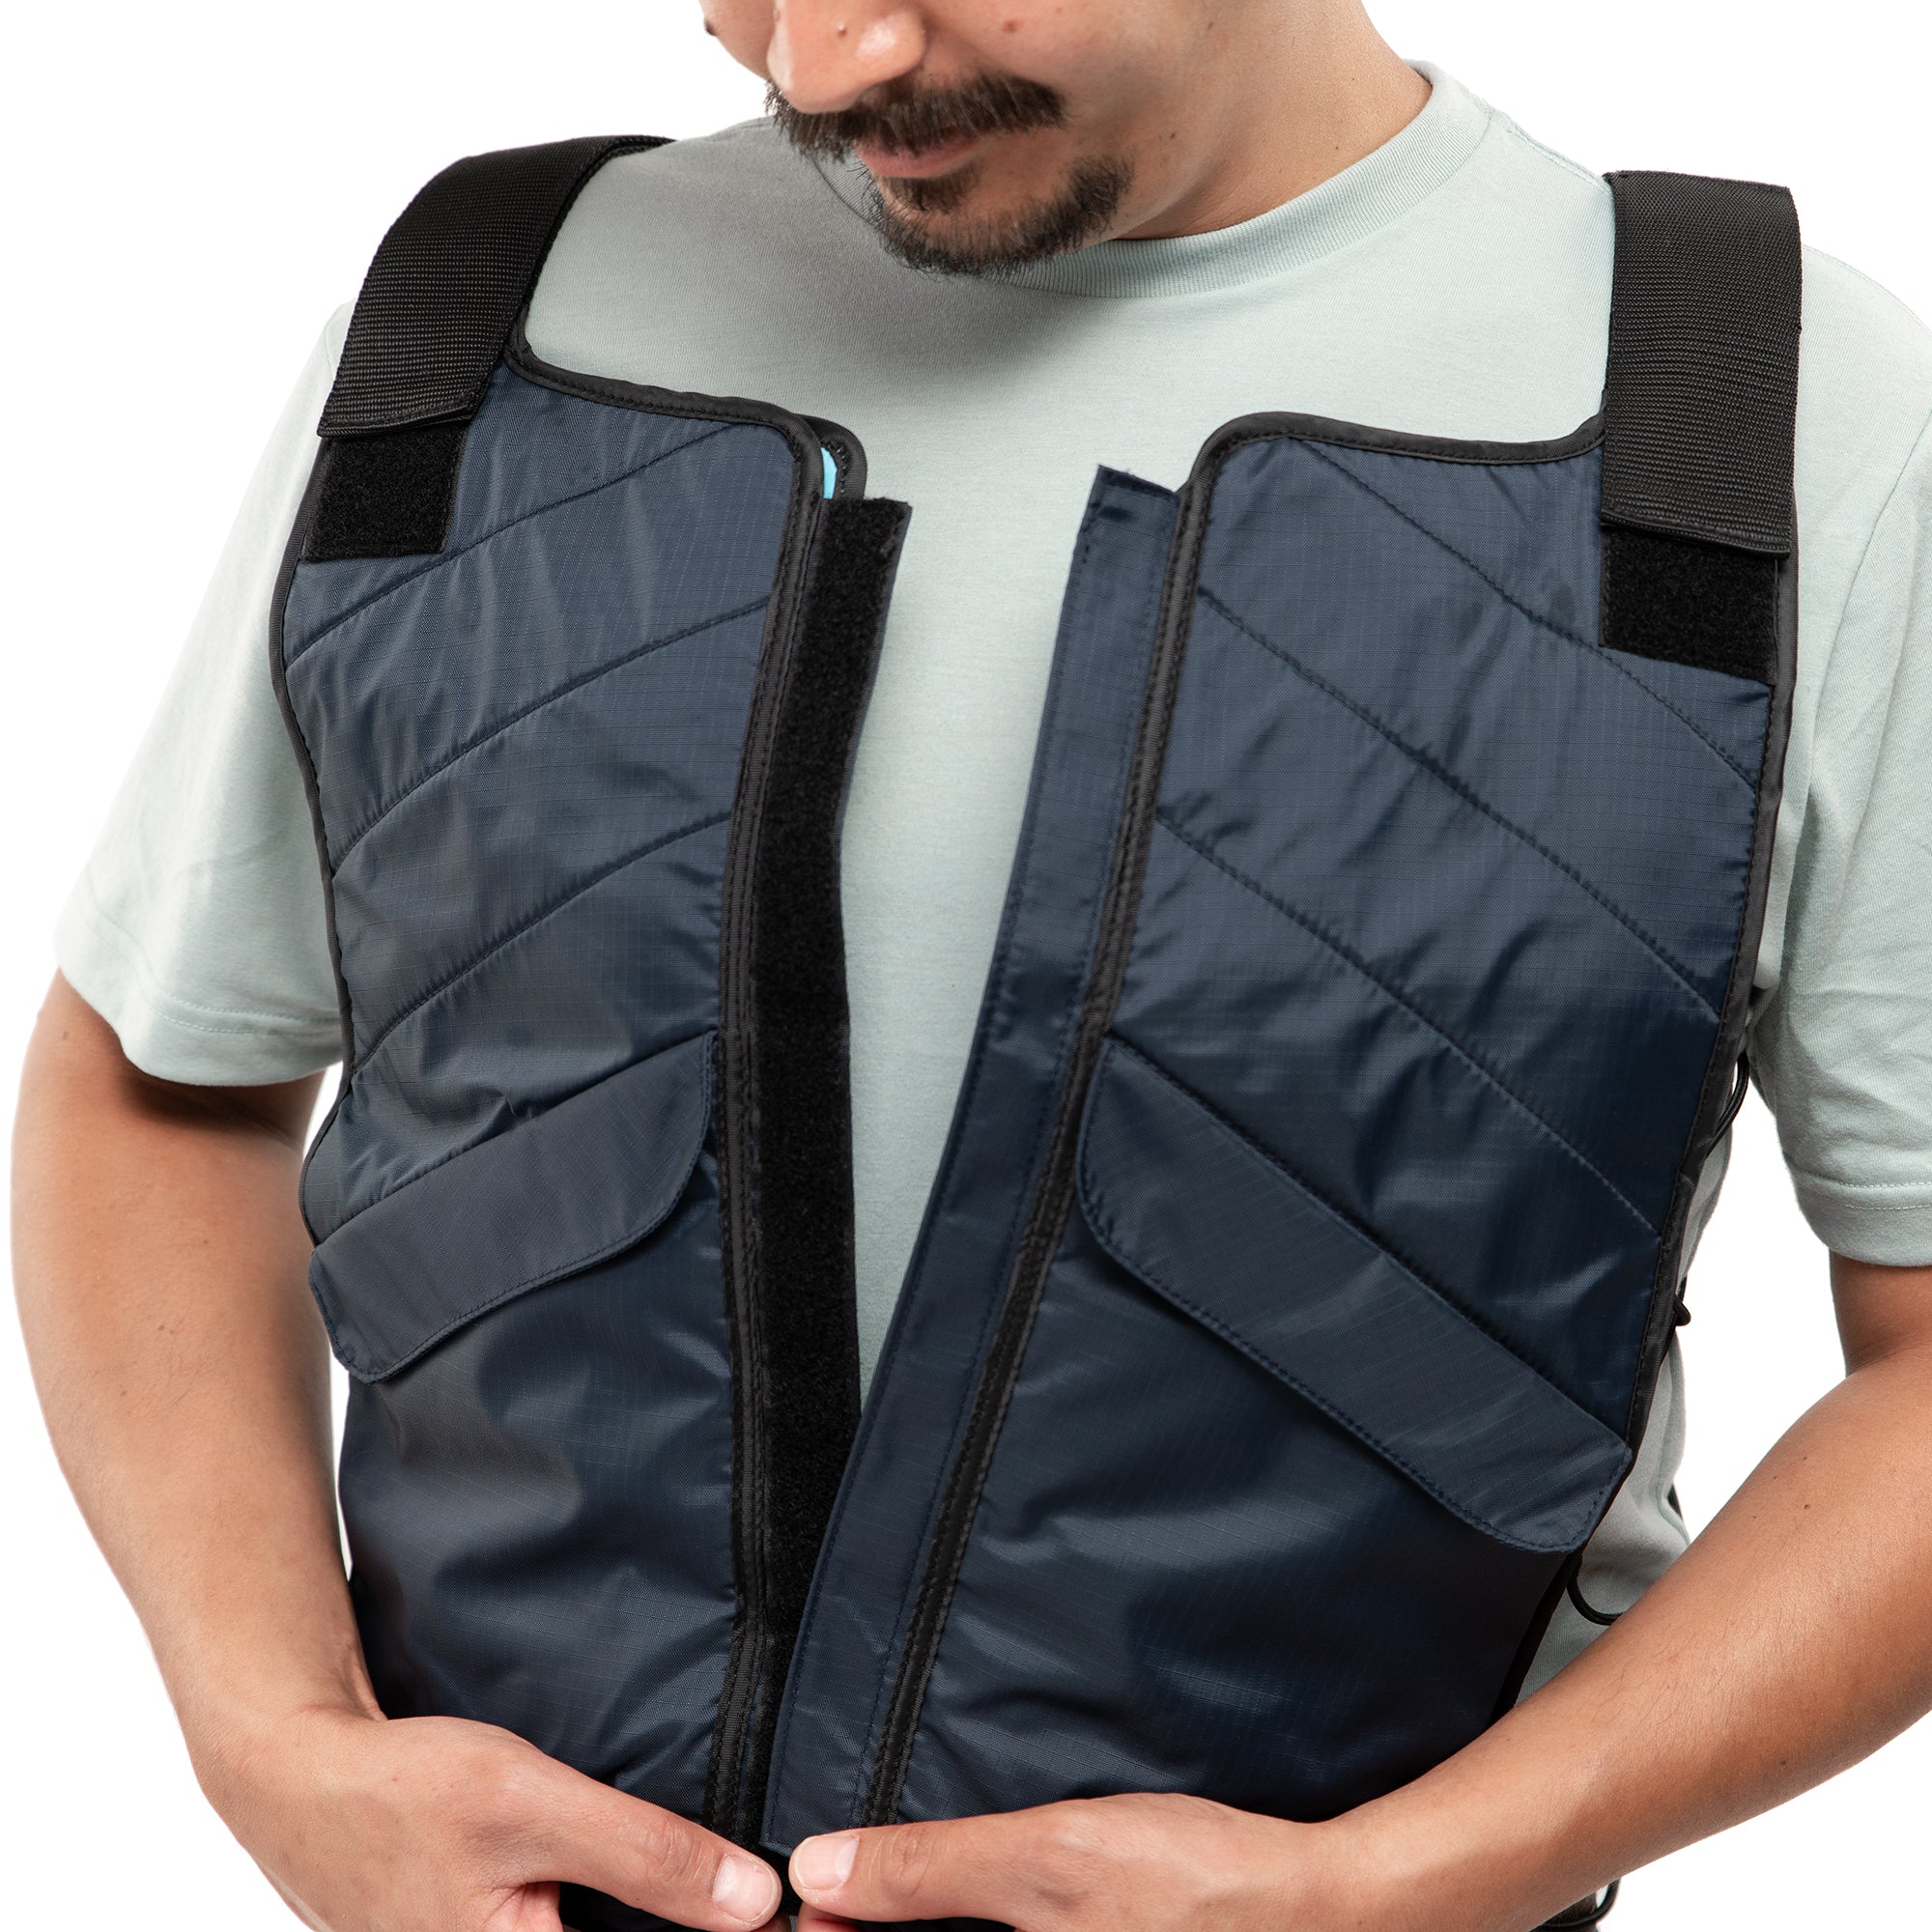 Man putting on FlexiFreeze Professional Ice vest - blue, velcro